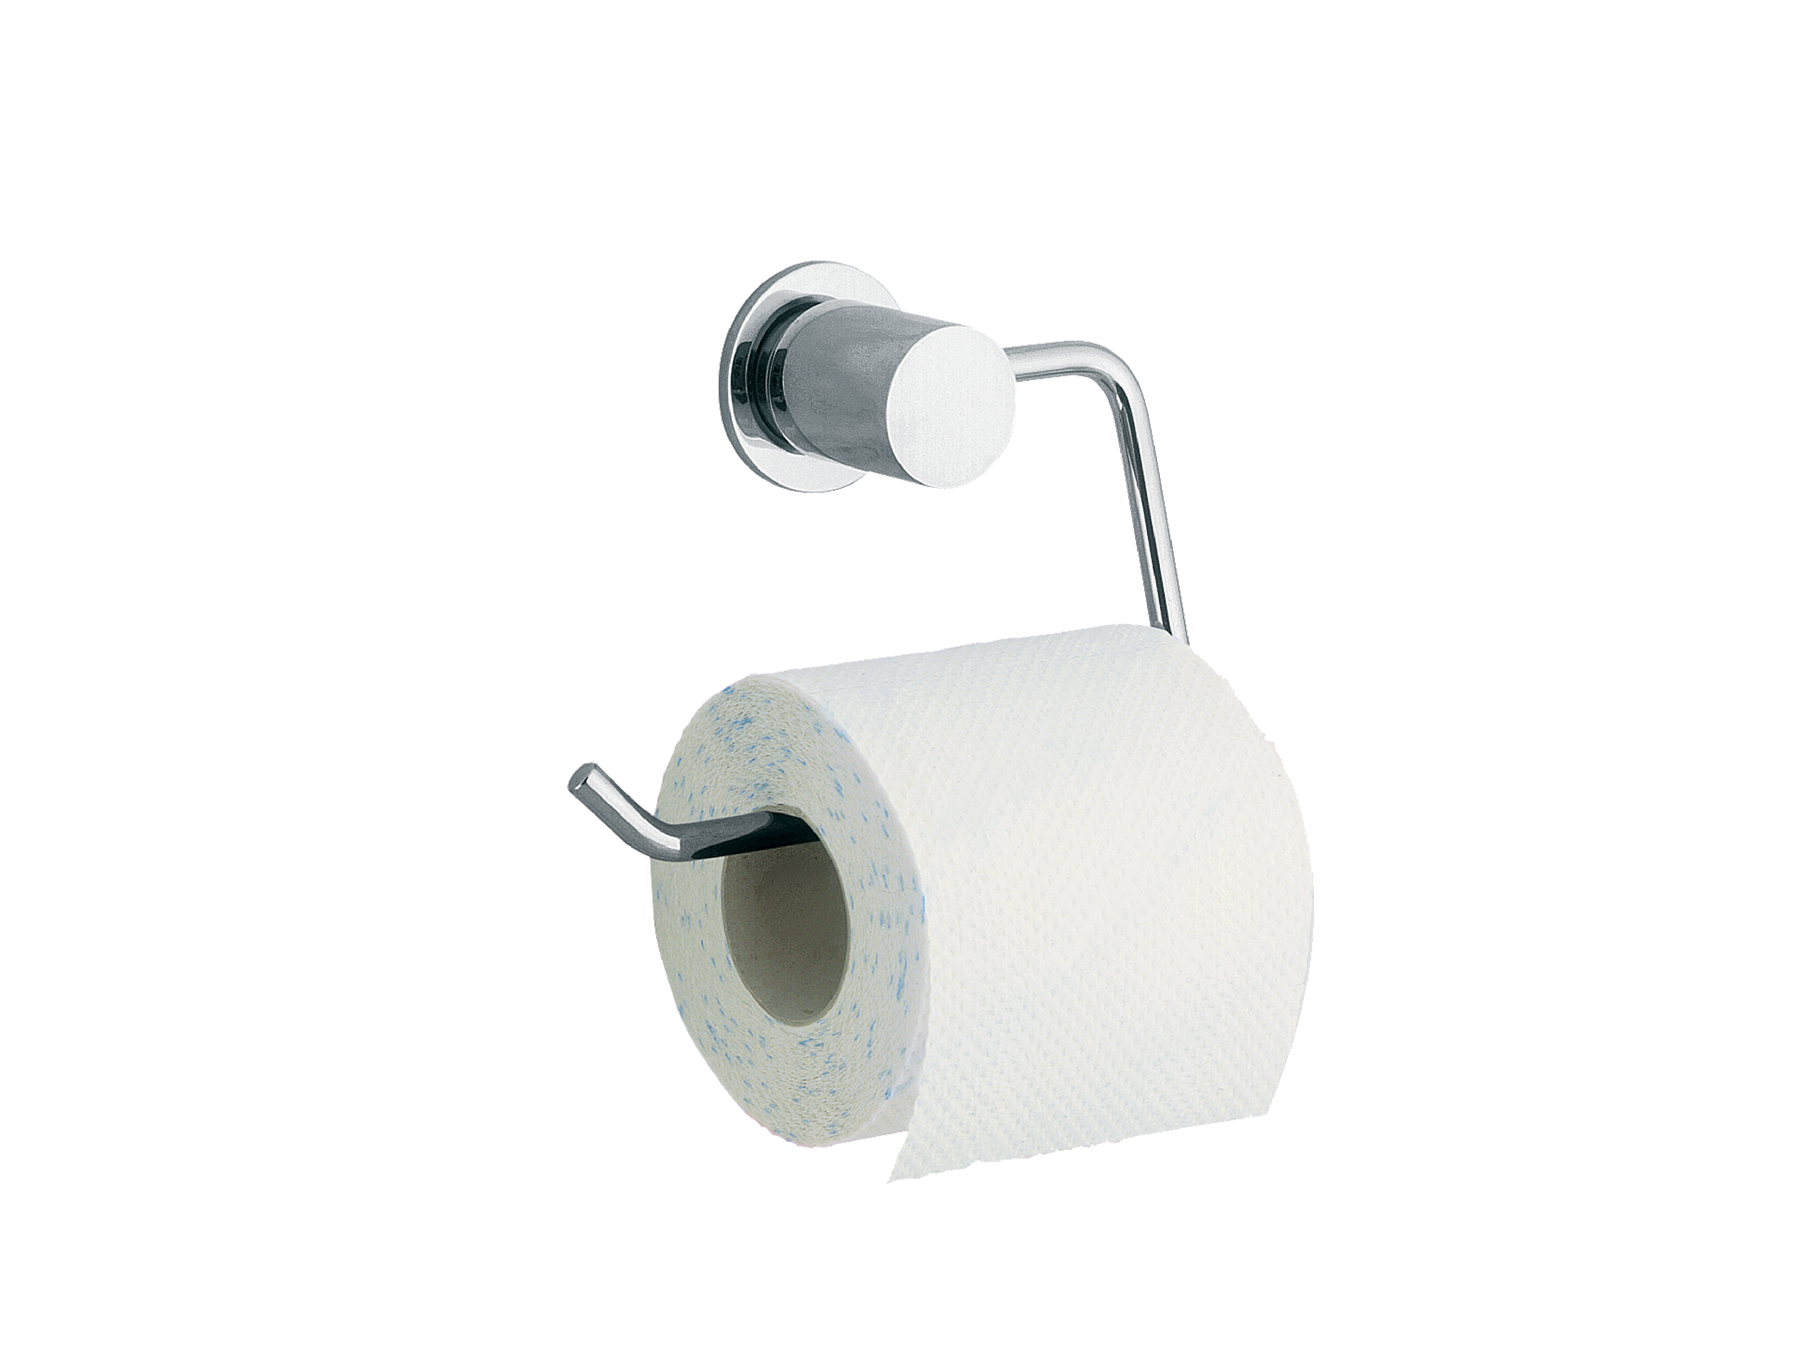 Toiletpaper holder